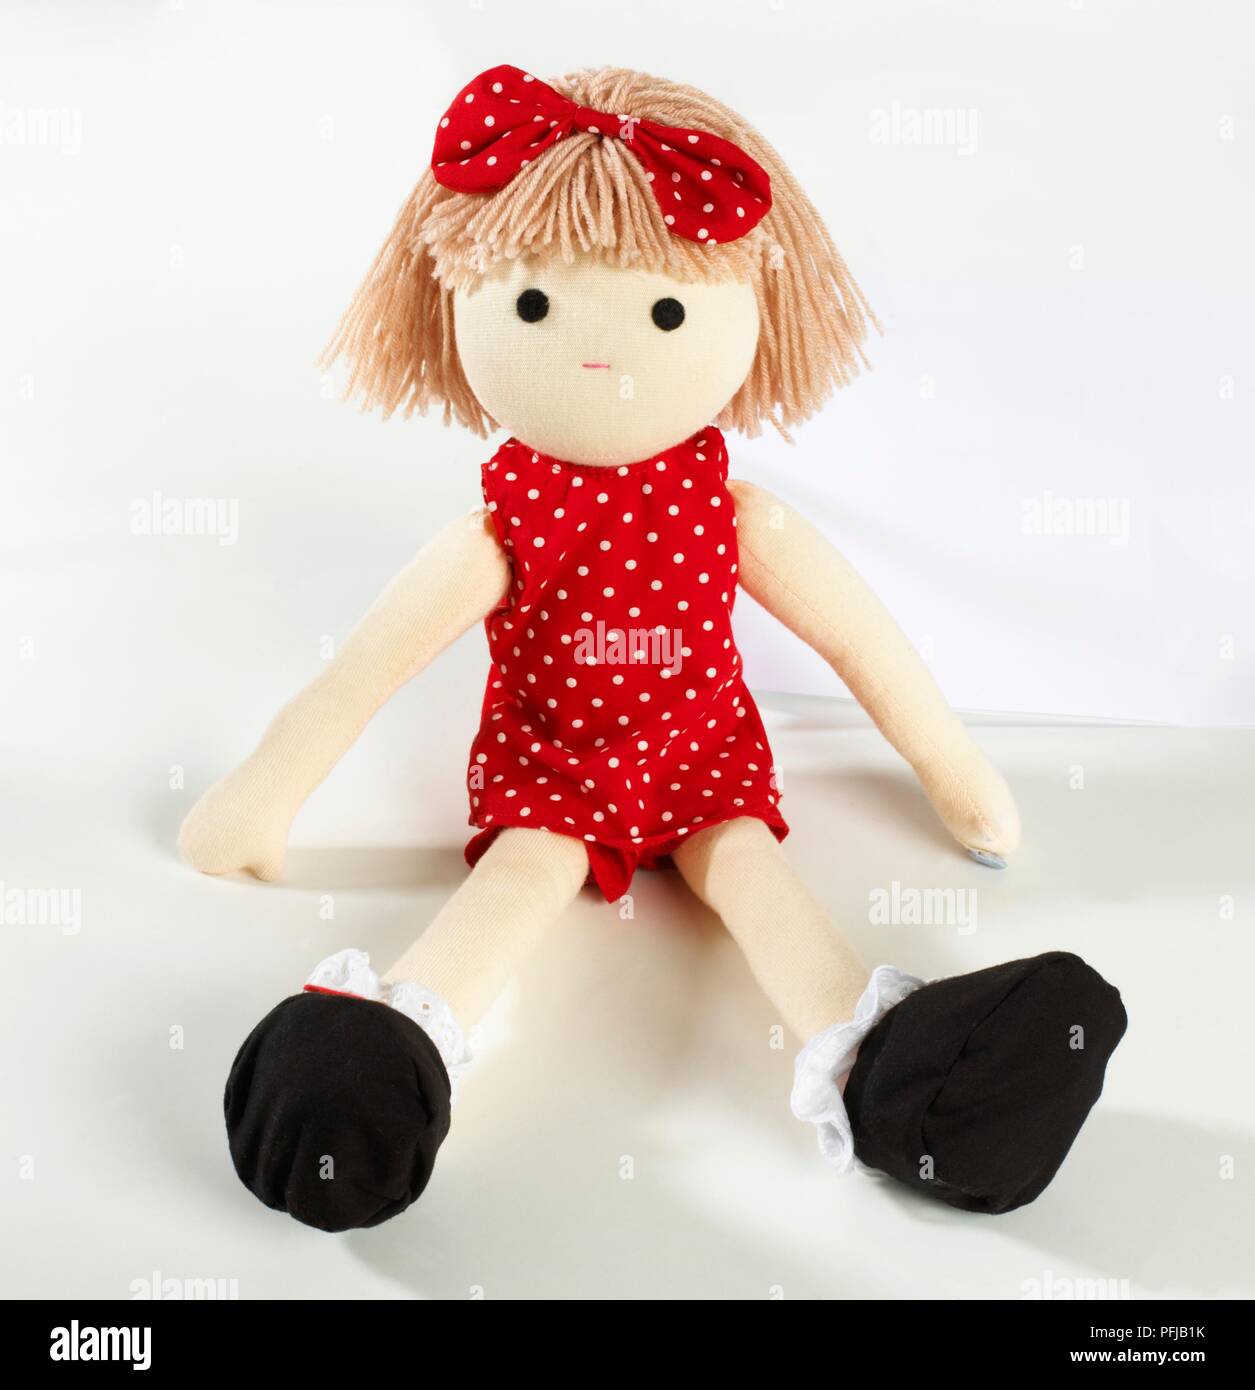 Rag dool wearing red polka dot dress and bow on head Stock Photo